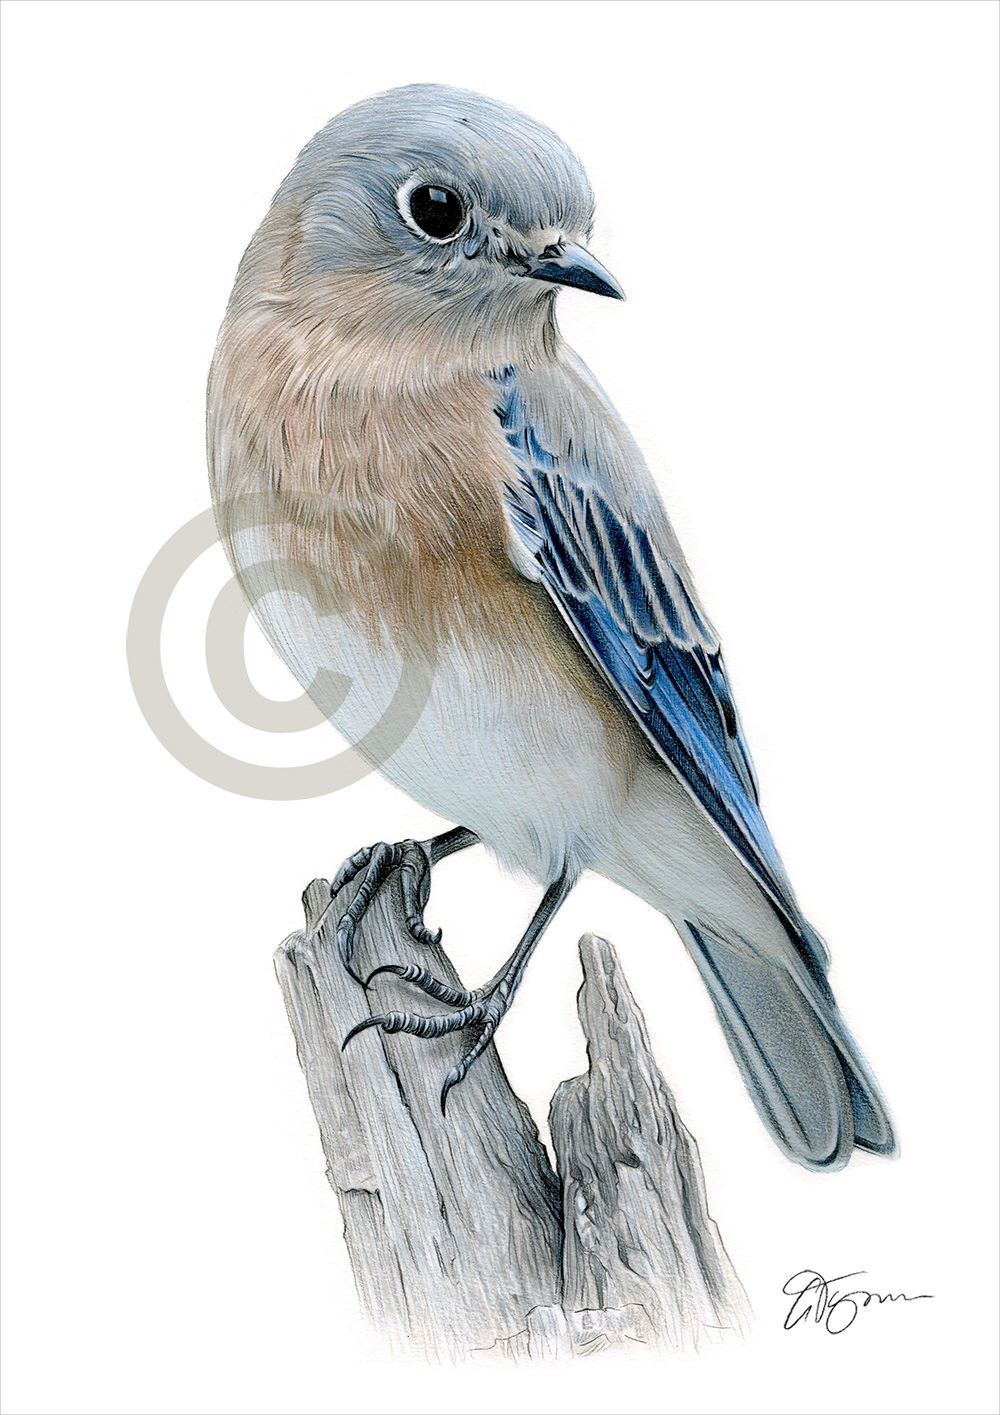 Colour pencil drawing of a bluebird by artist Gary Tymon